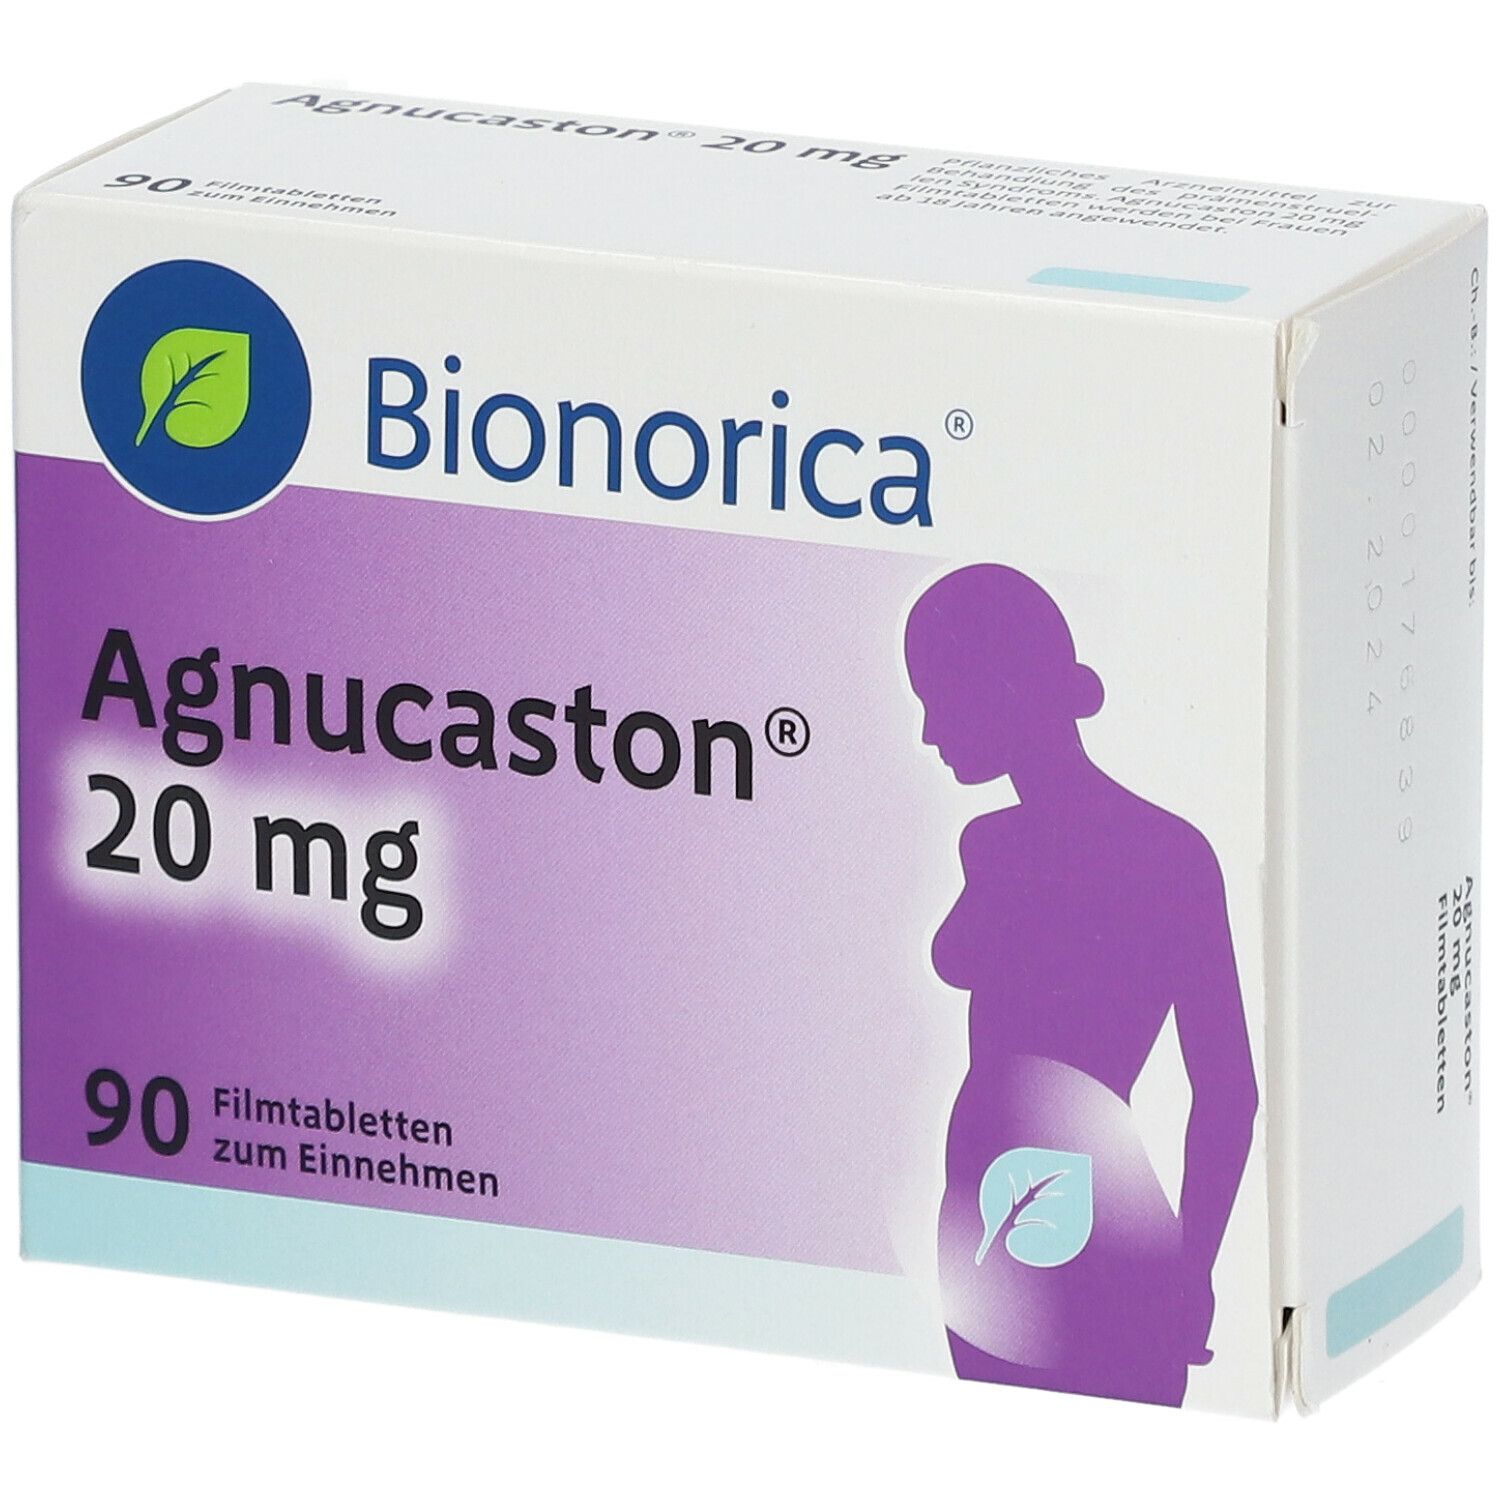 Agnucaston® 20 mg